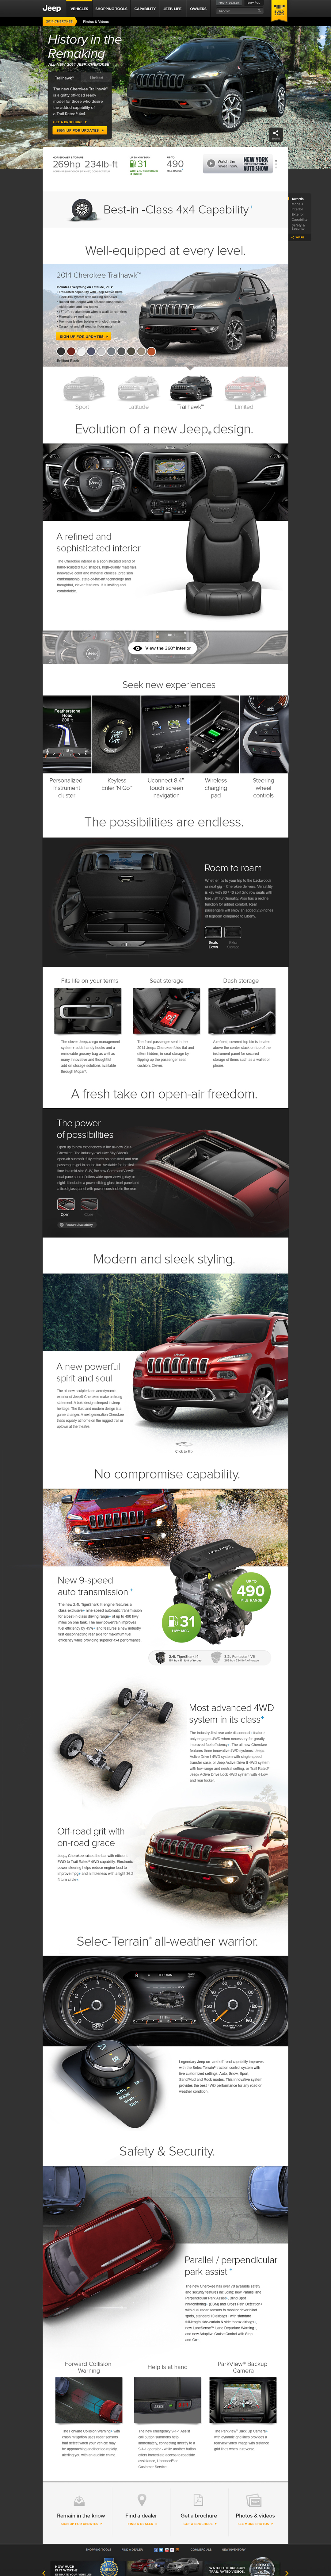 Adobe Portfolio jeep Grand Cherokee cherokee compass Liberty patriot Wrangler wrangler unlimited automotive   vehicles experience design